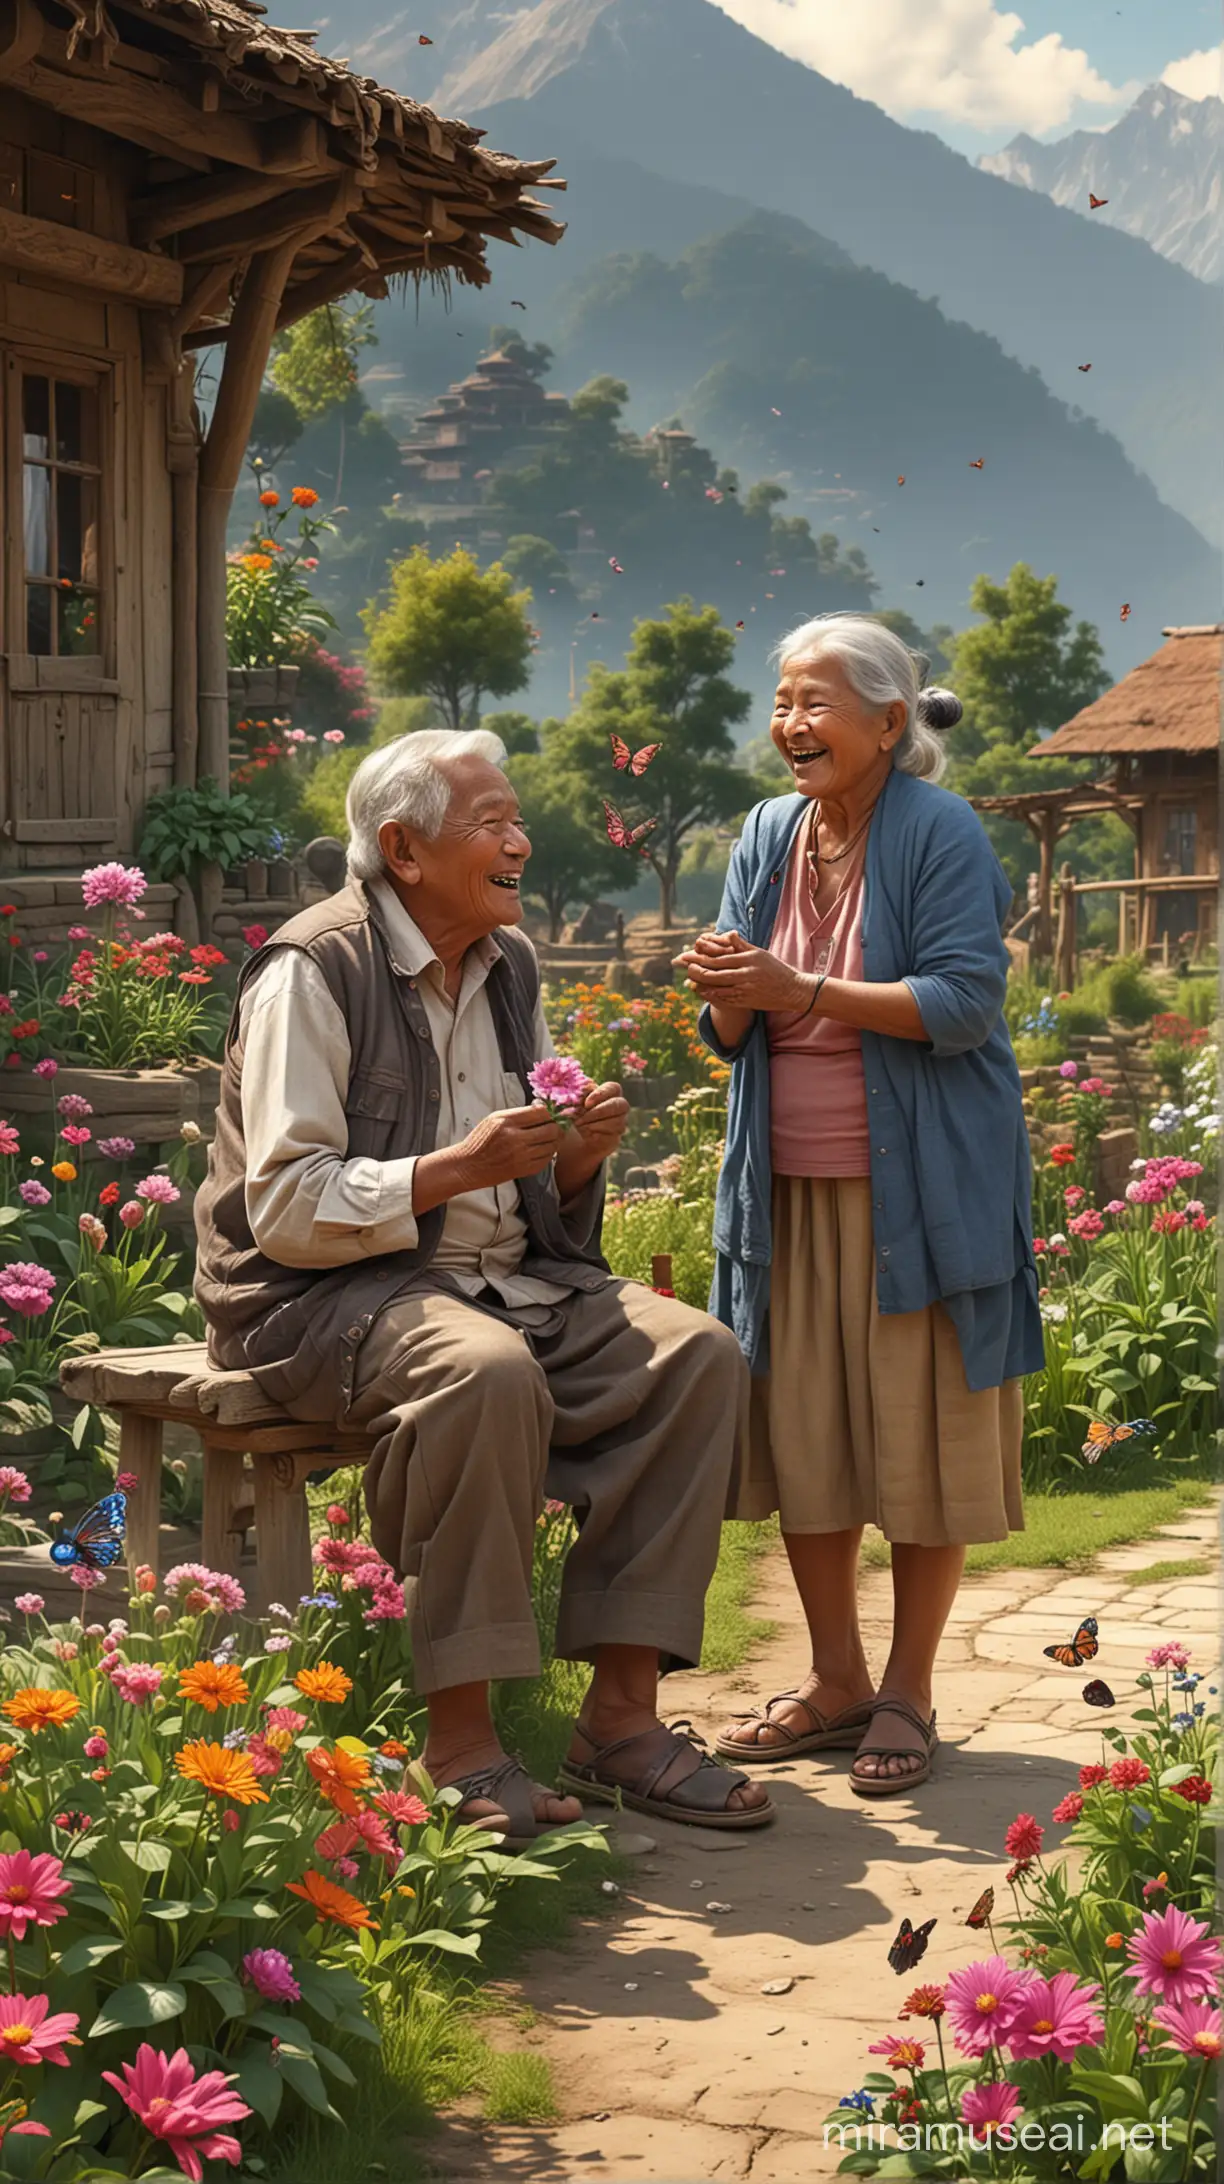 Joyful Nepali Elderly Couple Laughing in Vibrant Mountain Flower Garden with Butterflies and Birds